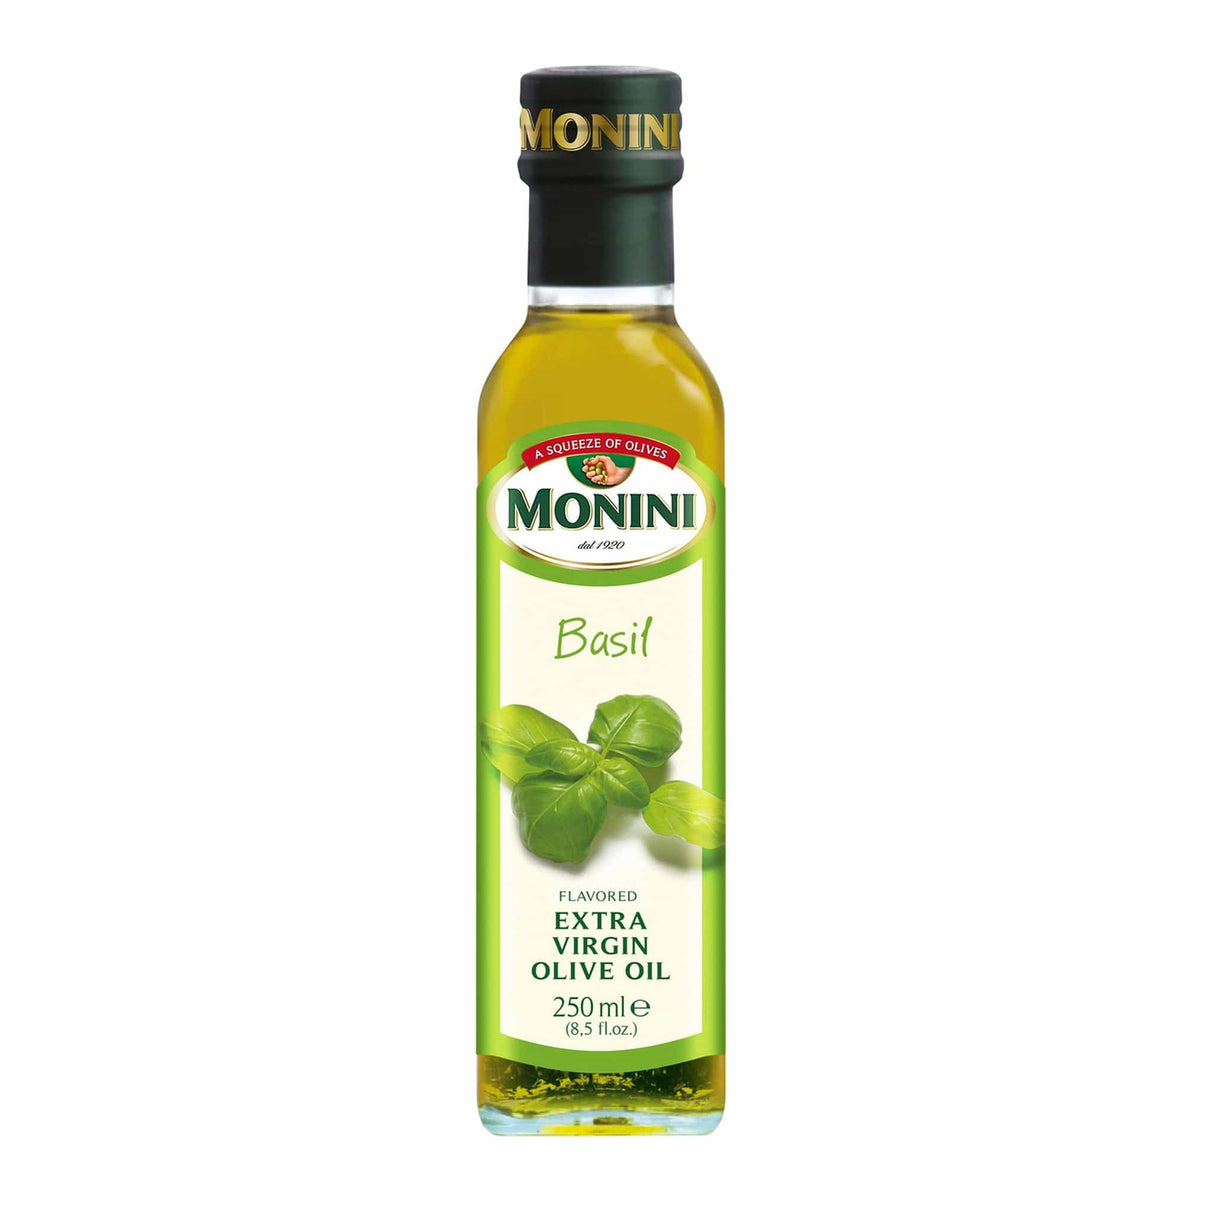 Monini Basil Flavored Extra Virgin Olive Oil